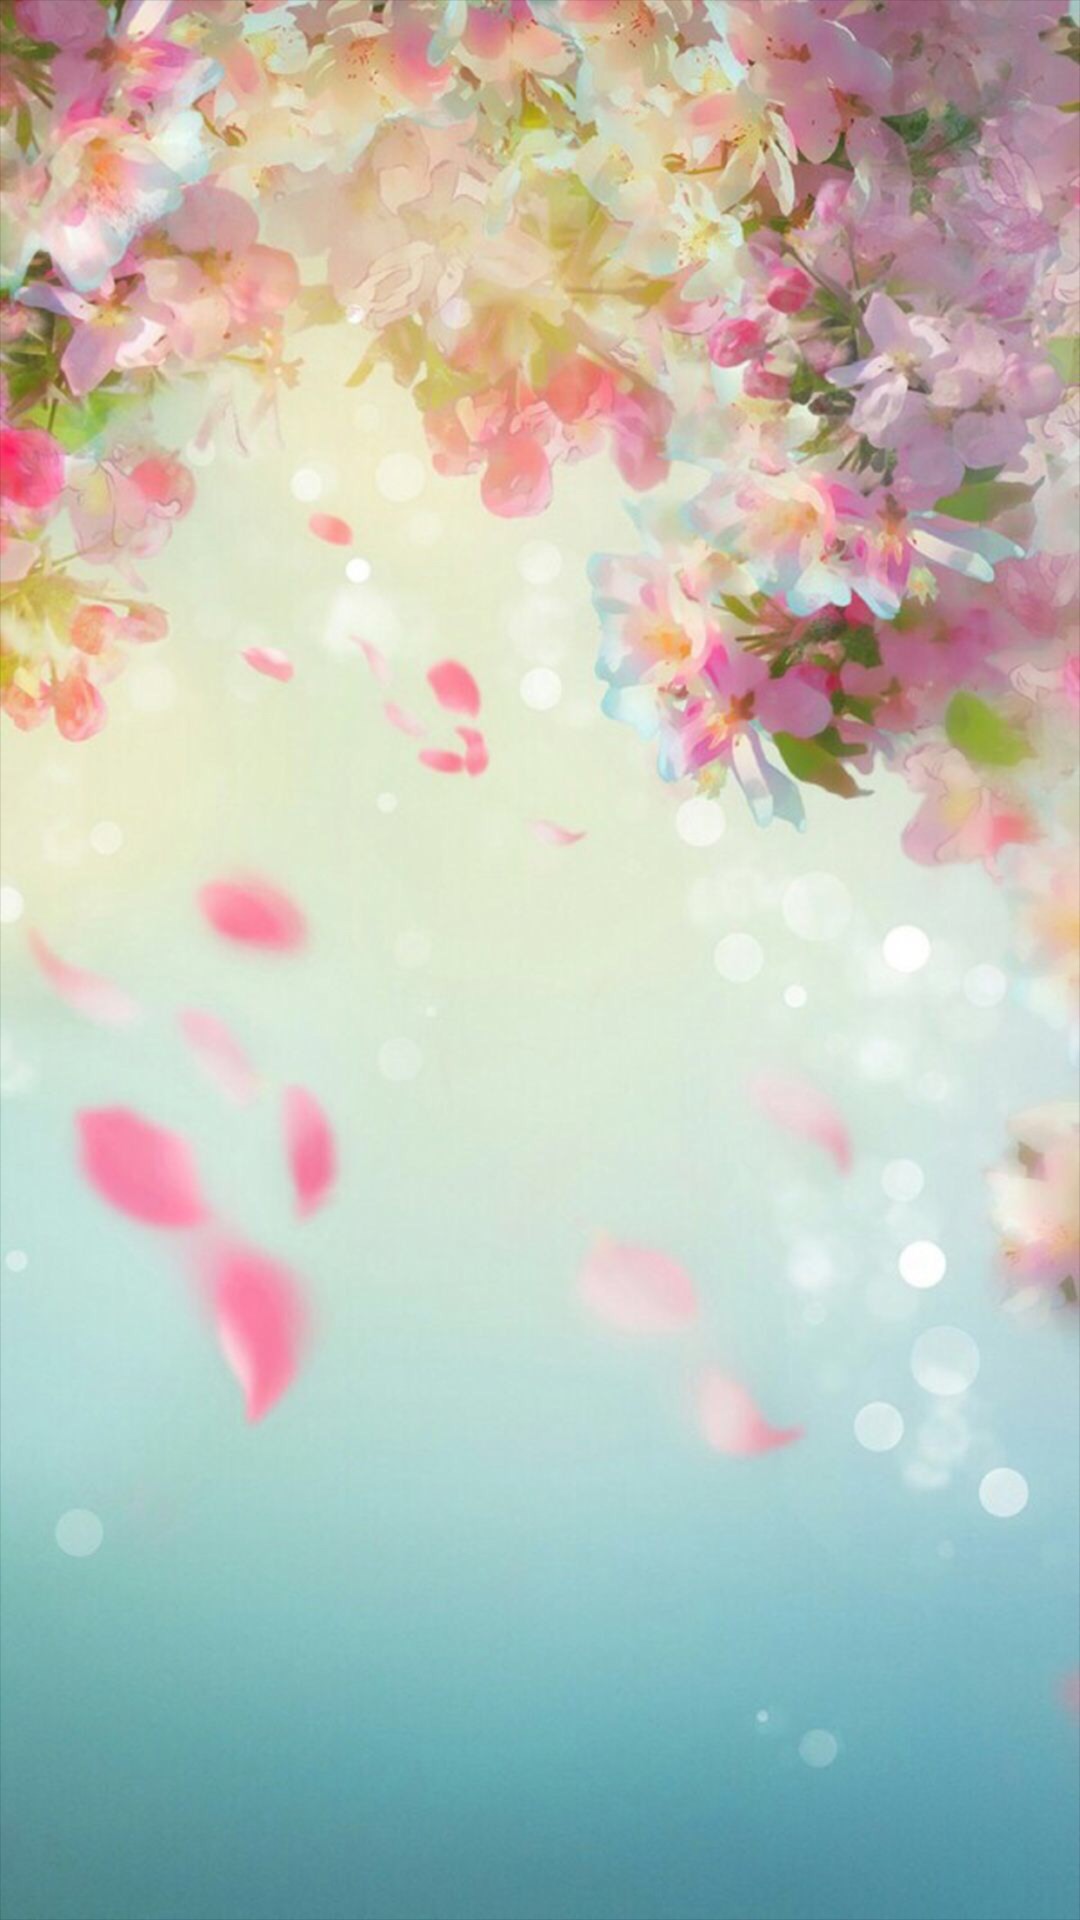 1080x1920 Flower petal painting wallpaper.Flowers, petal, dream, watercolor, green,  vintage